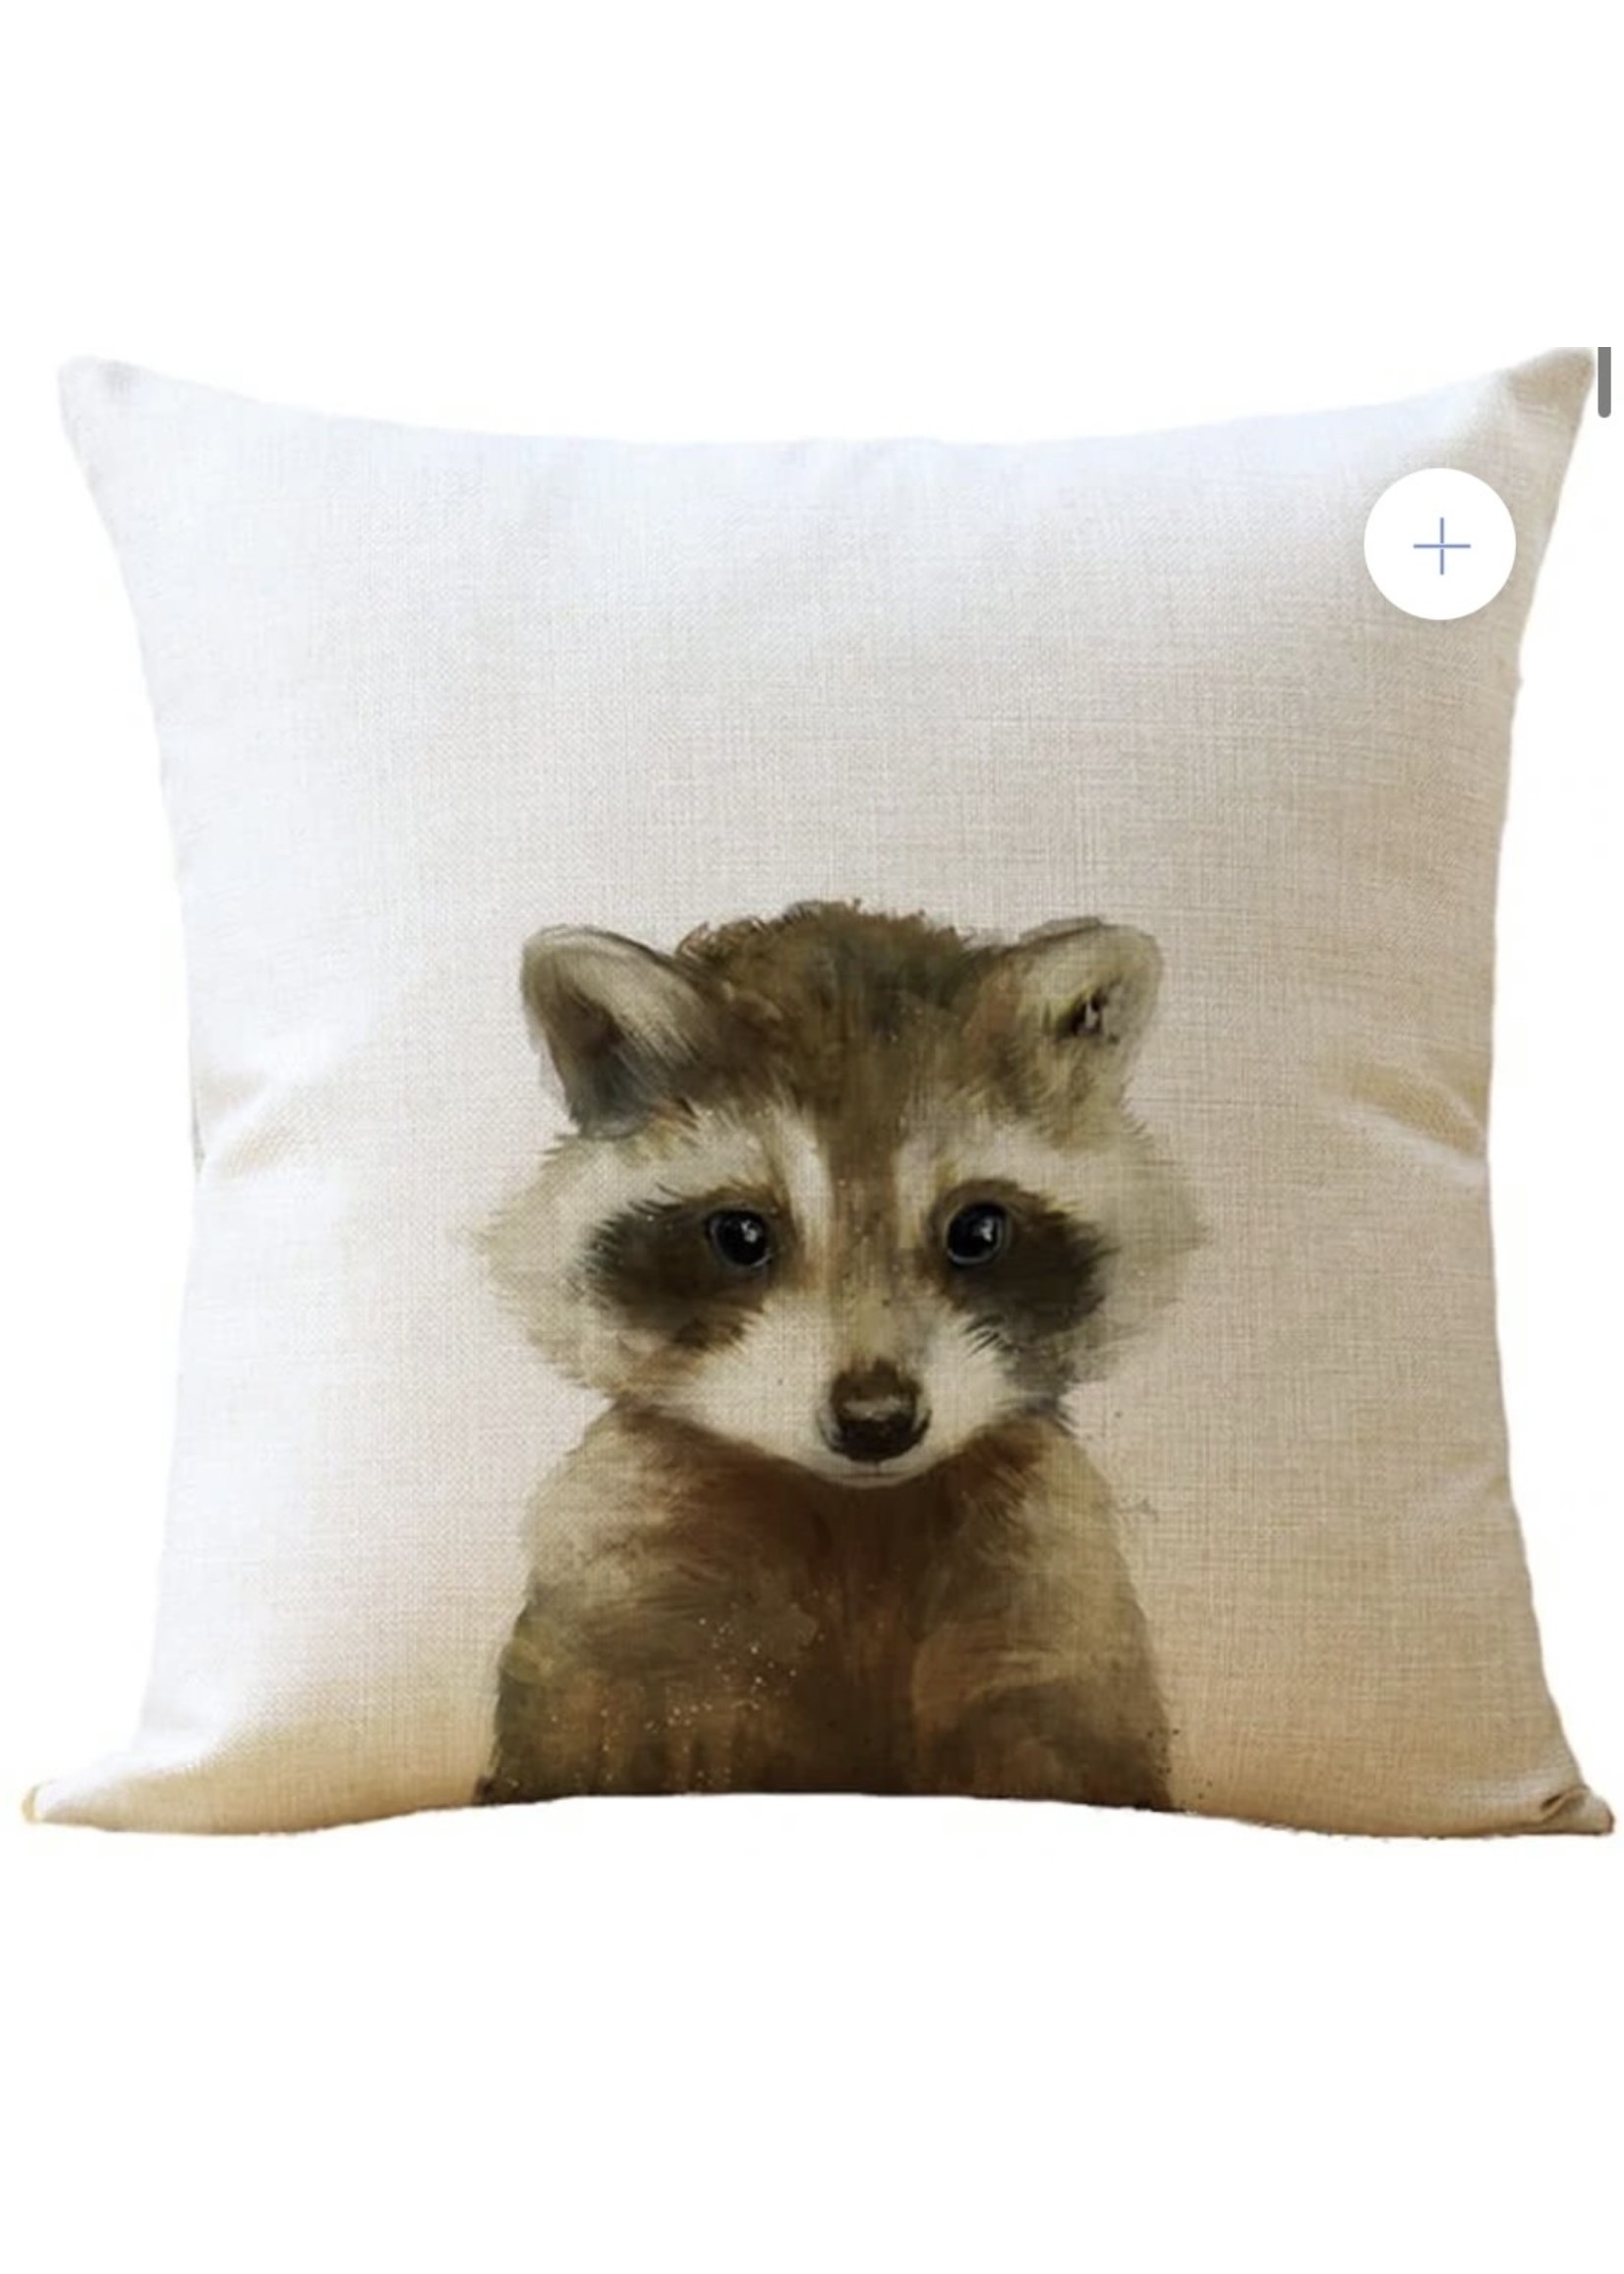 Moderny Baby Animals Pillow - Raccoon